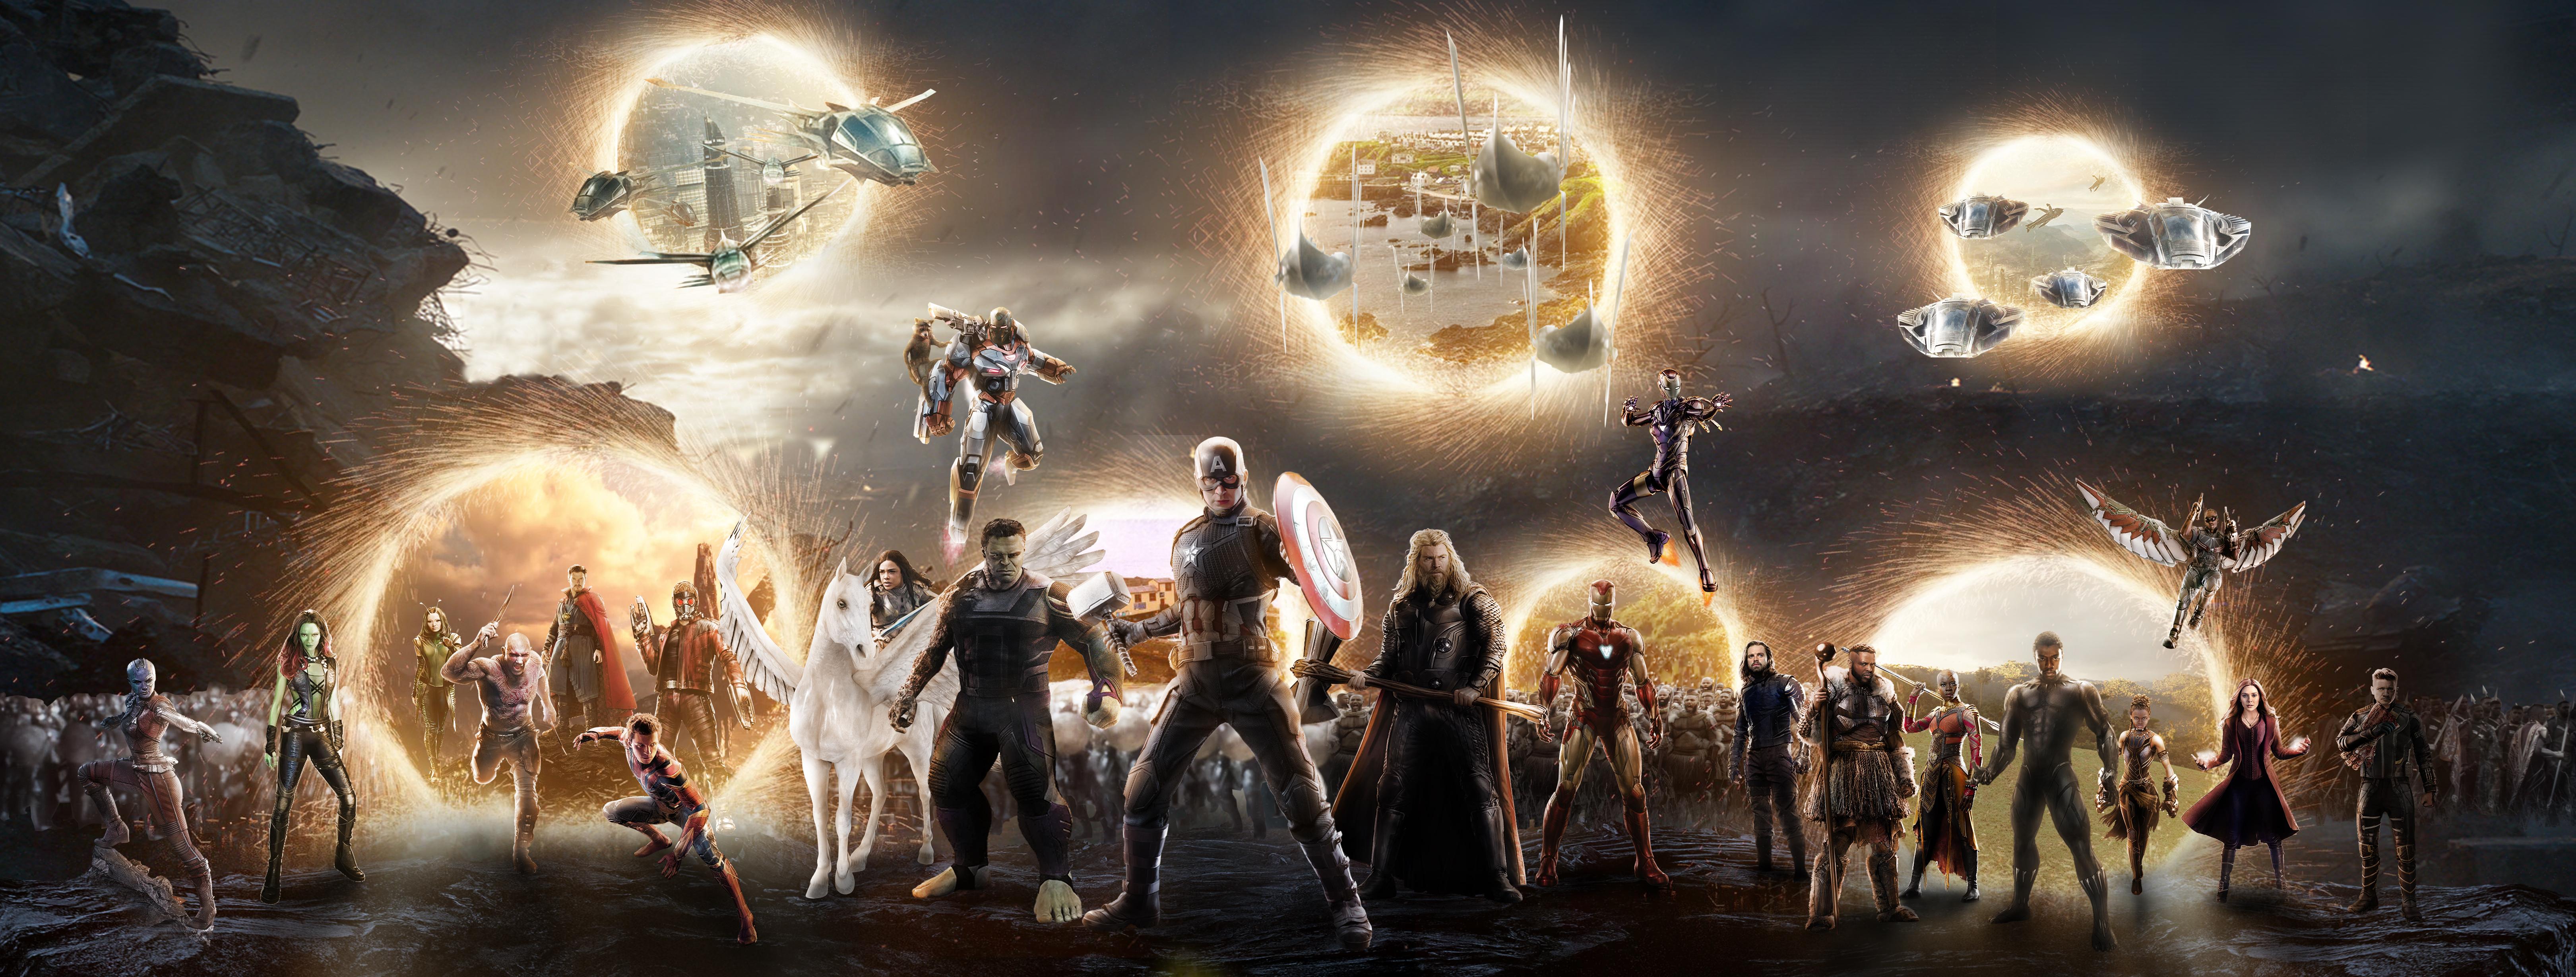 Avengers Endgame Final Battle Wallpapers - Wallpaper Cave